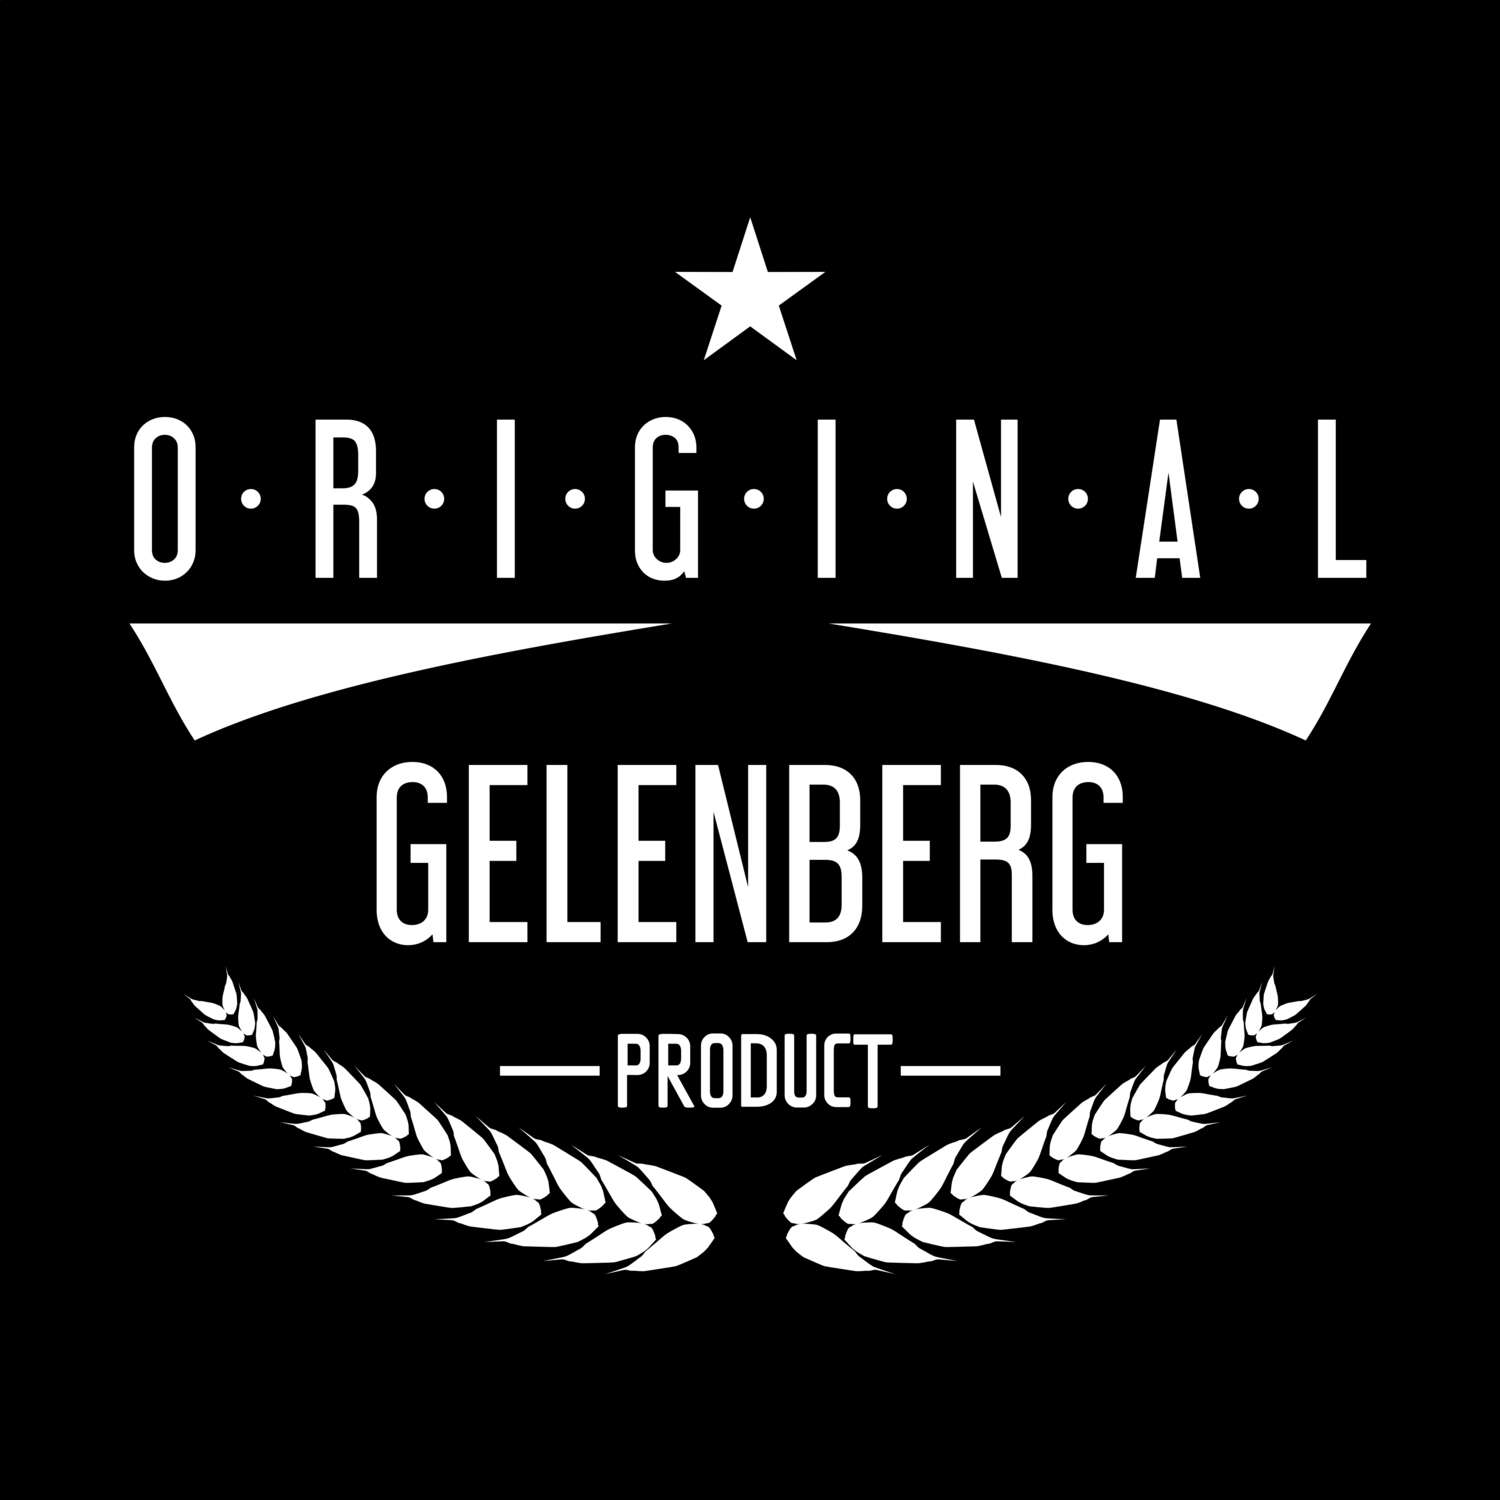 Gelenberg T-Shirt »Original Product«